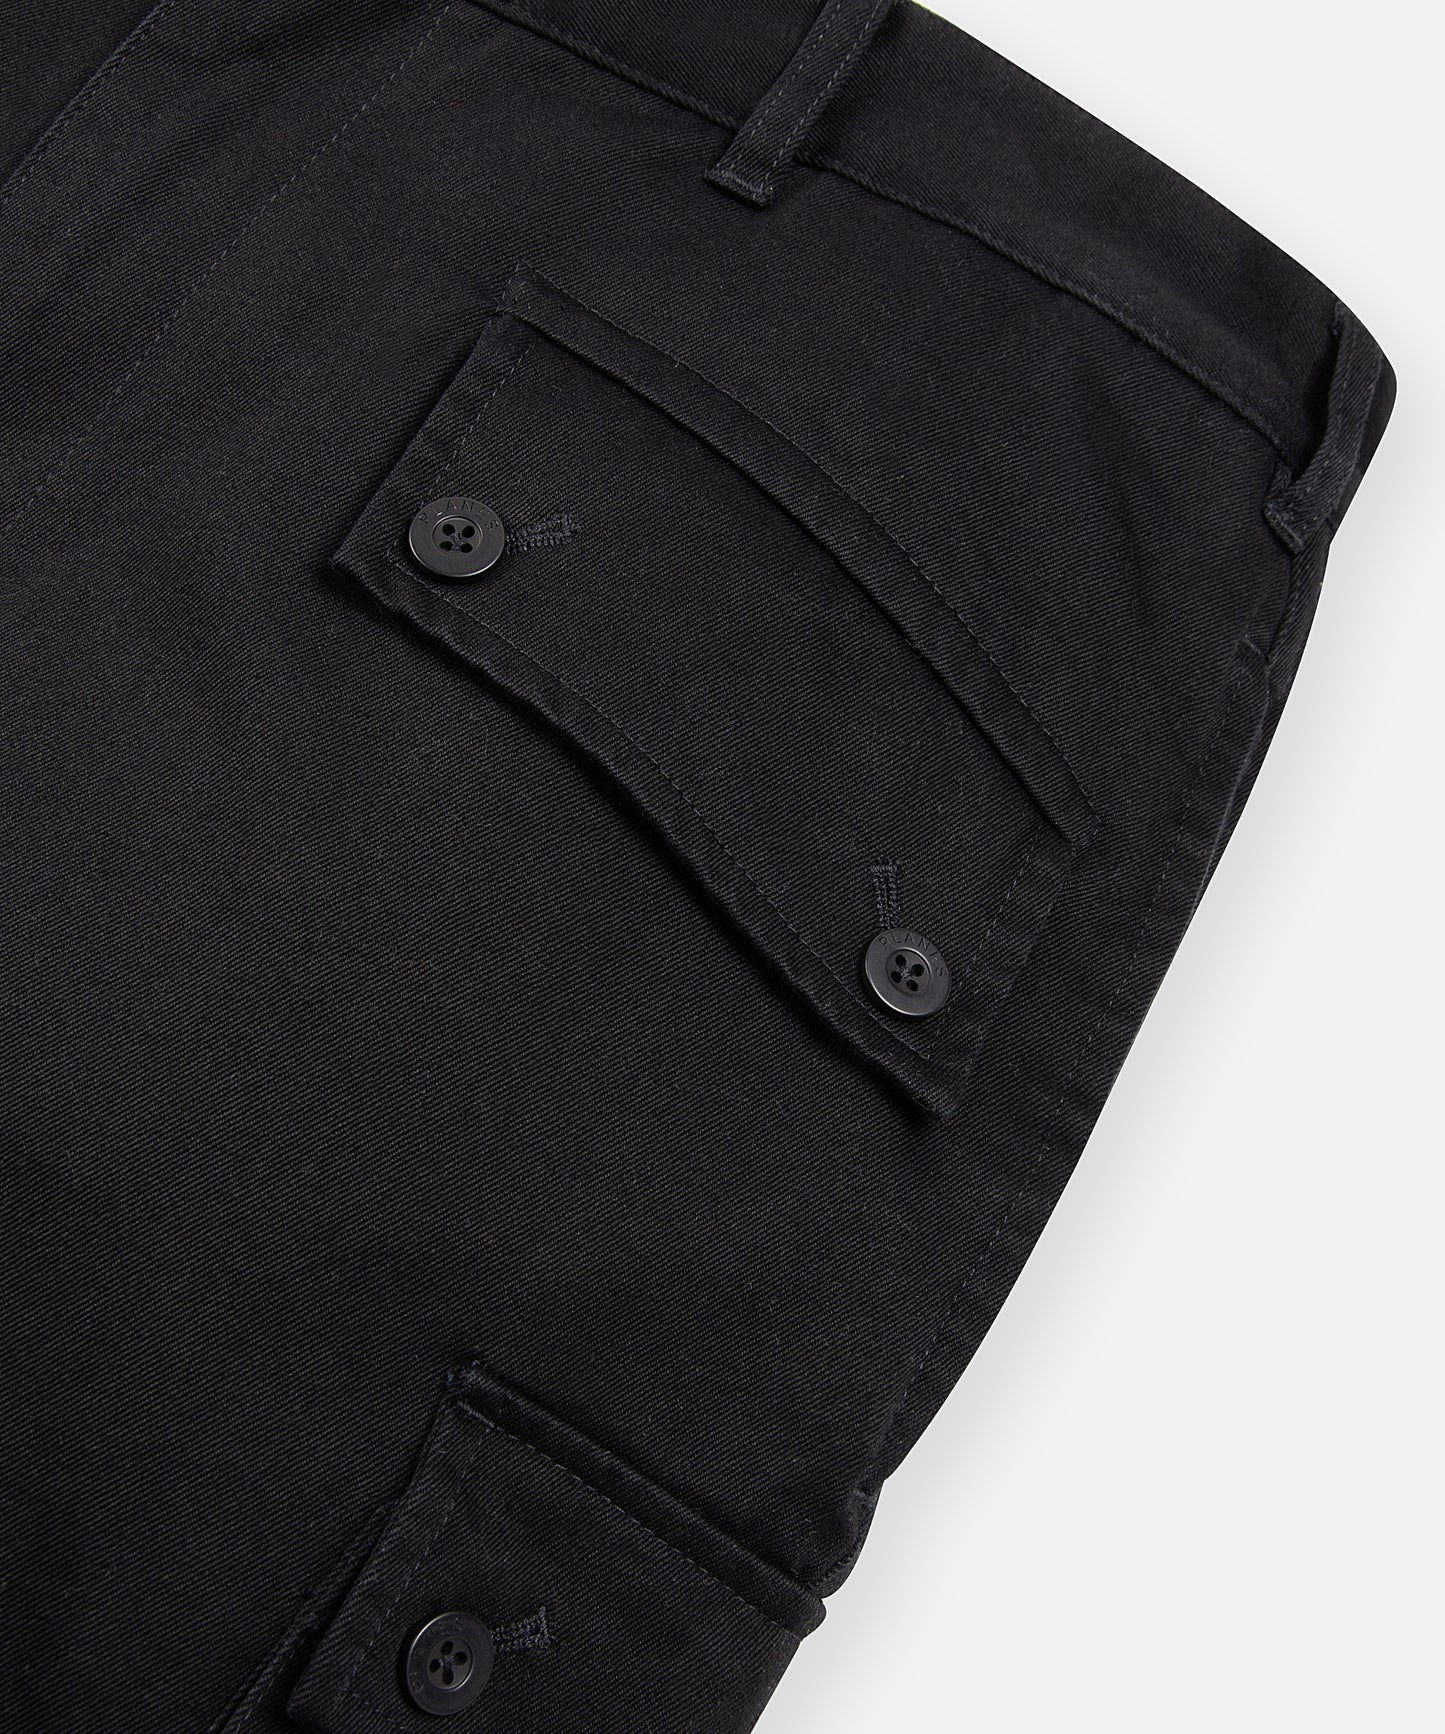 CUSTOM_ALT_TEXT: Back welt pocket with button flap closure on Paper Planes Flare Cargo Pant, color Black.